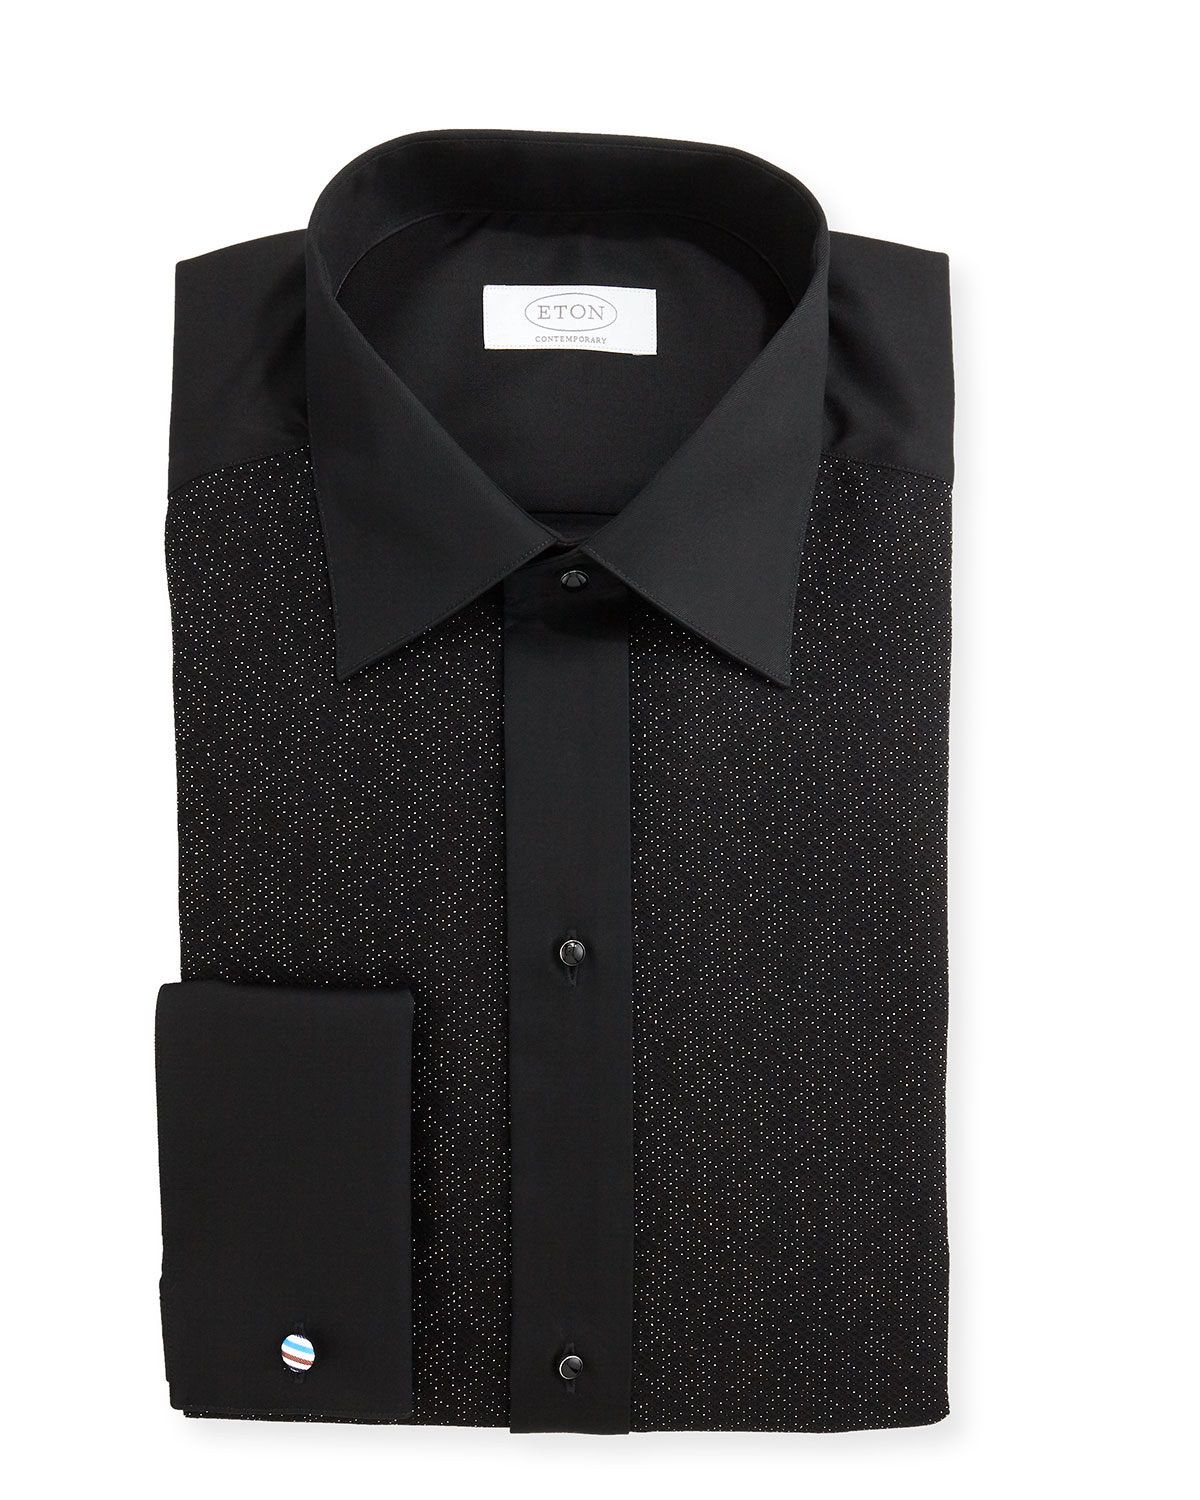 Eton of sweden Metallic Dotted Formal Shirt in Black for Men | Lyst